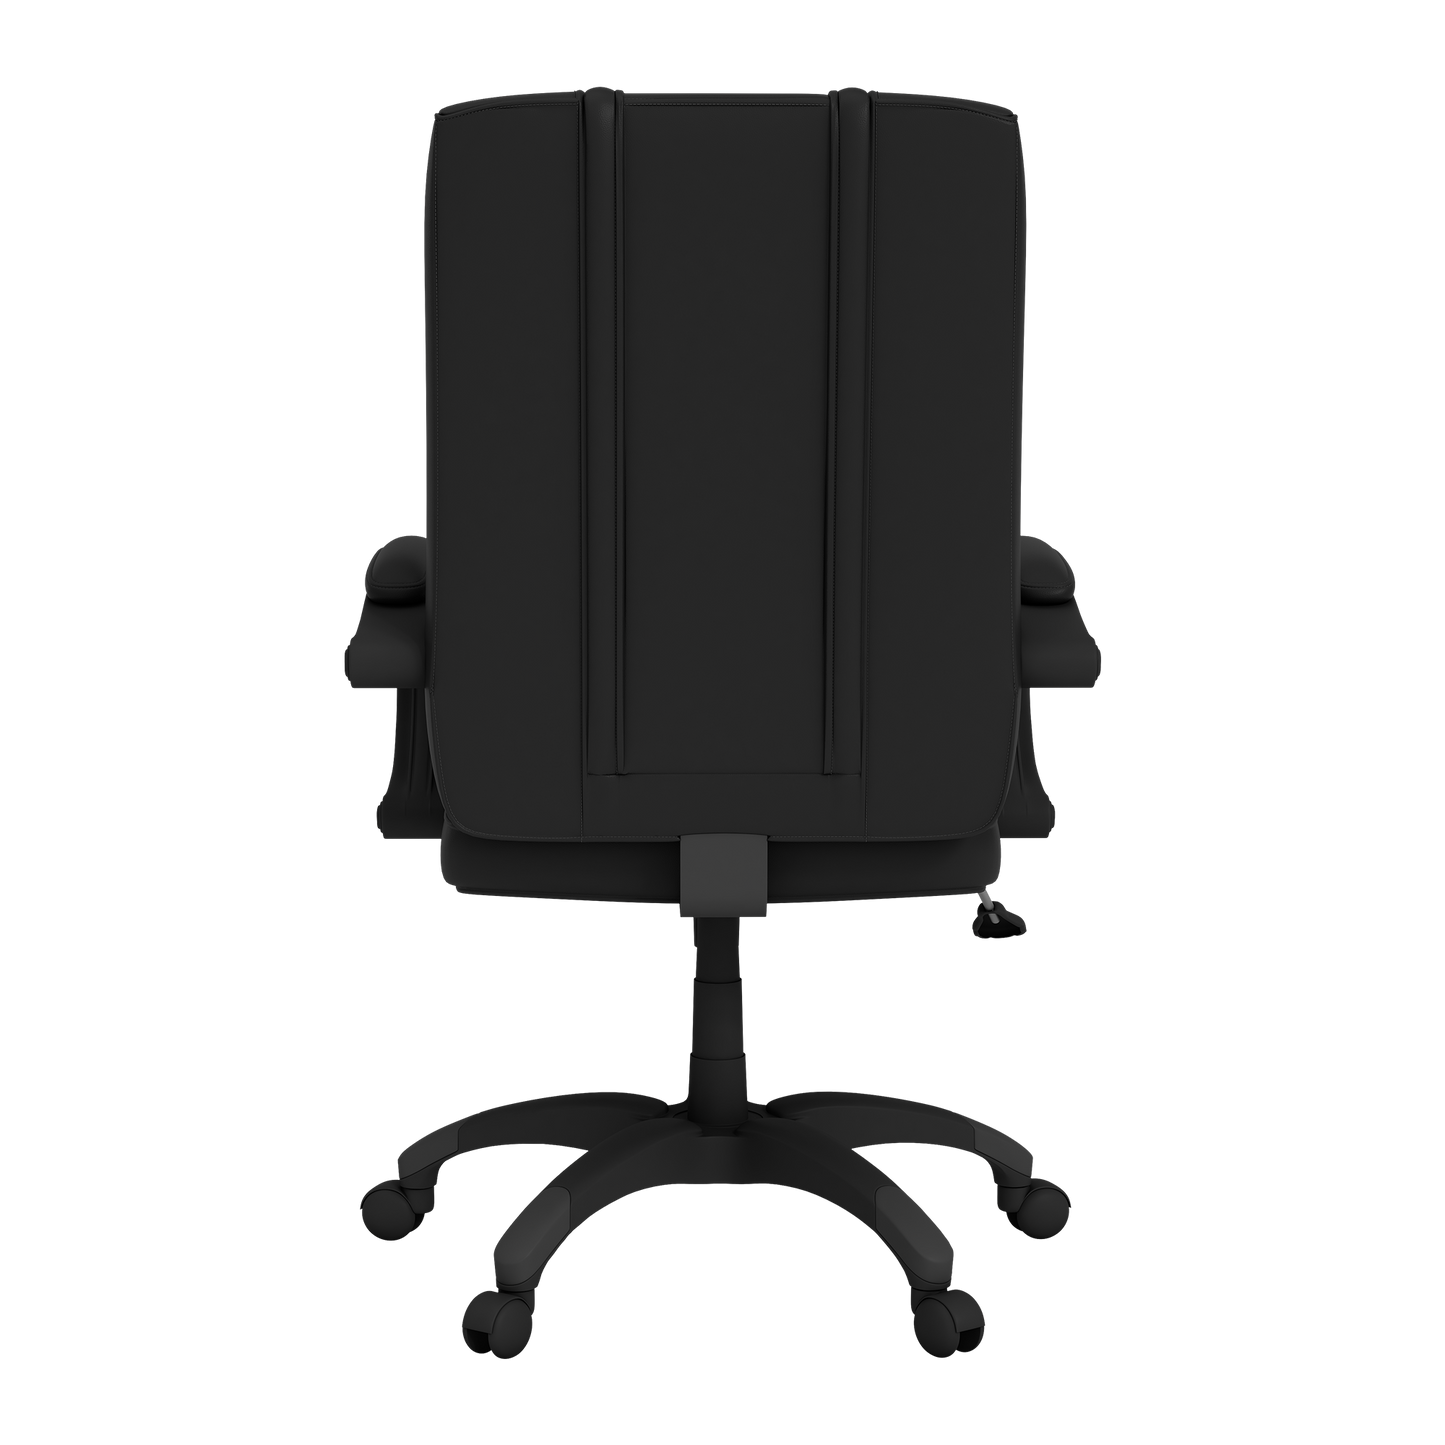 Office Chair 1000 with Major League Soccer Alternate Logo